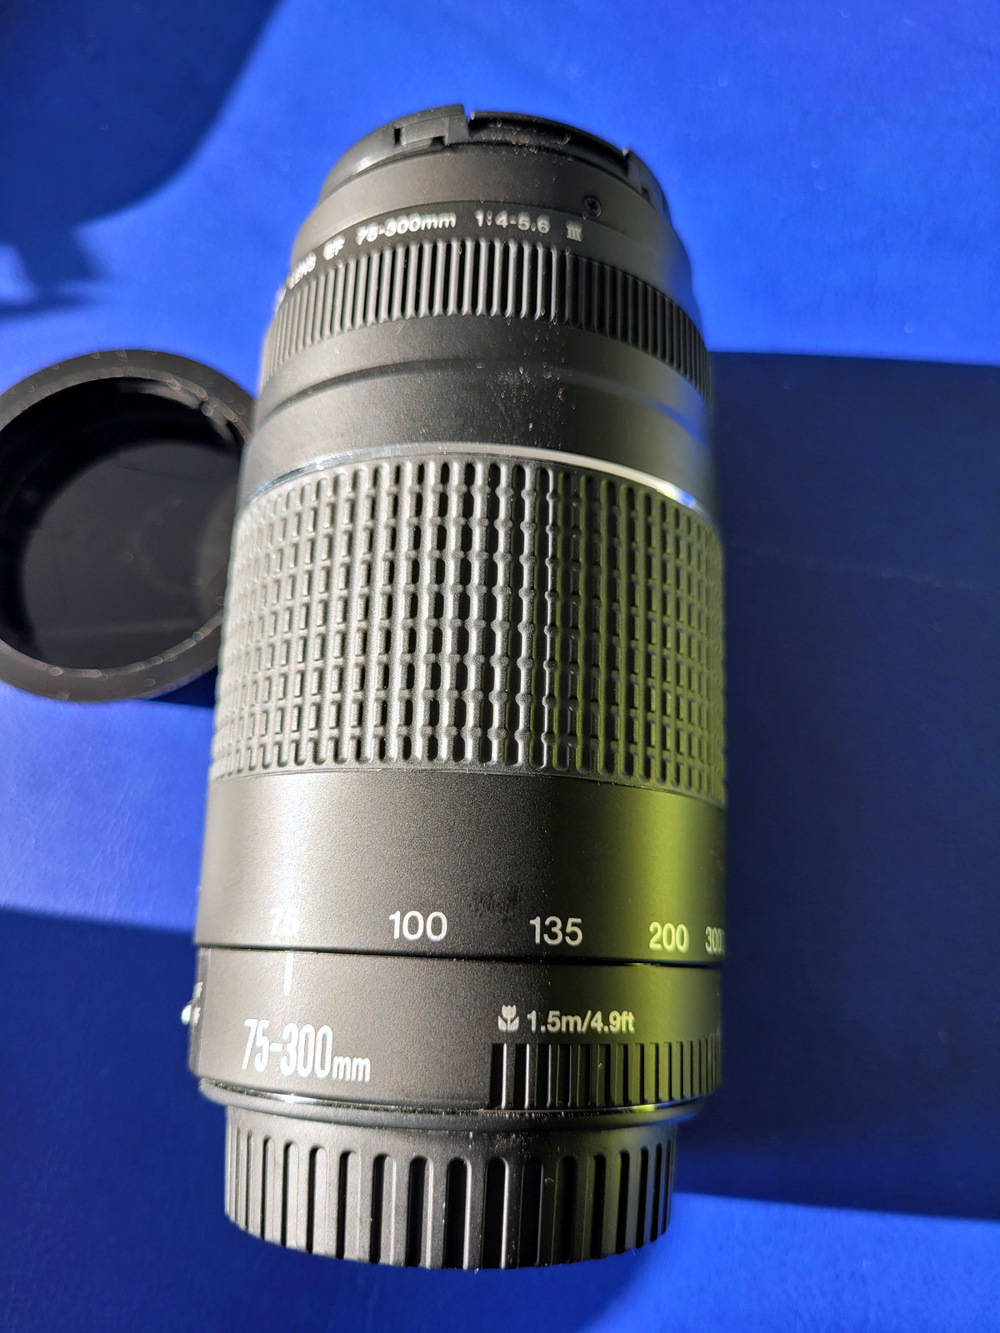 Verkaufe Zoom Canon Objektiv 75-300 III